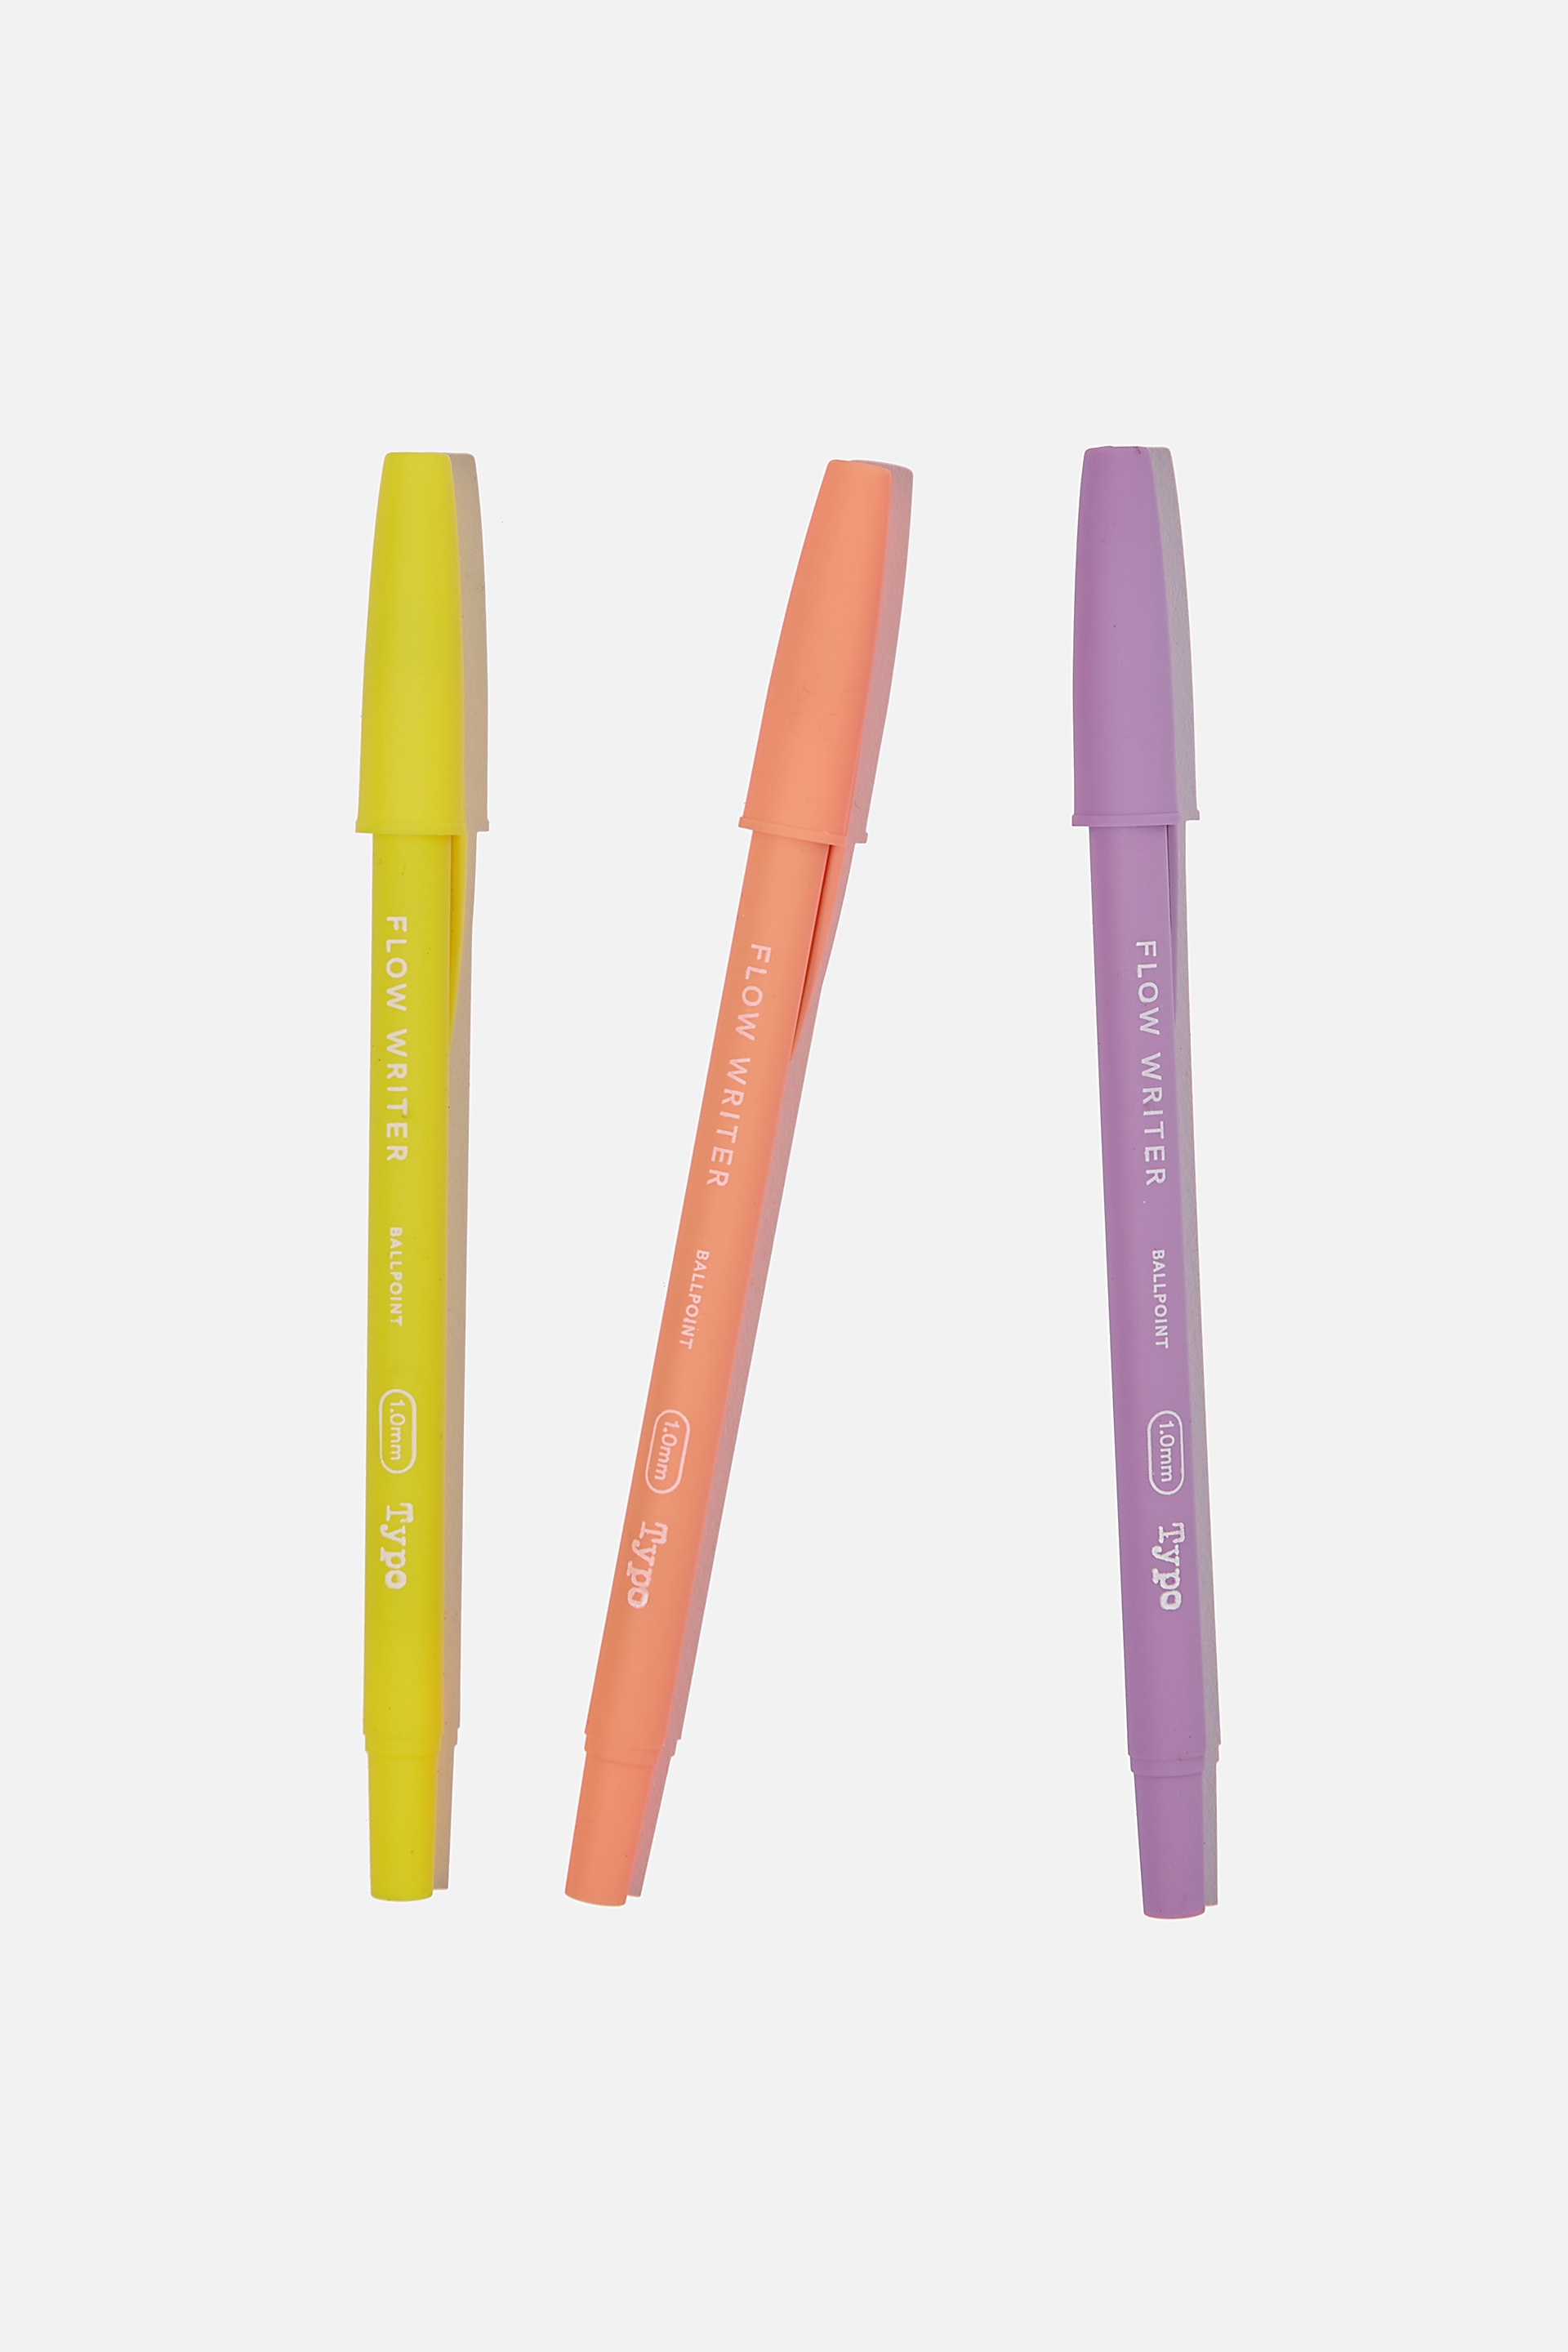 Typo - Black Ink Flow Writer Pen 3Pk - Lilac, peach & yellow